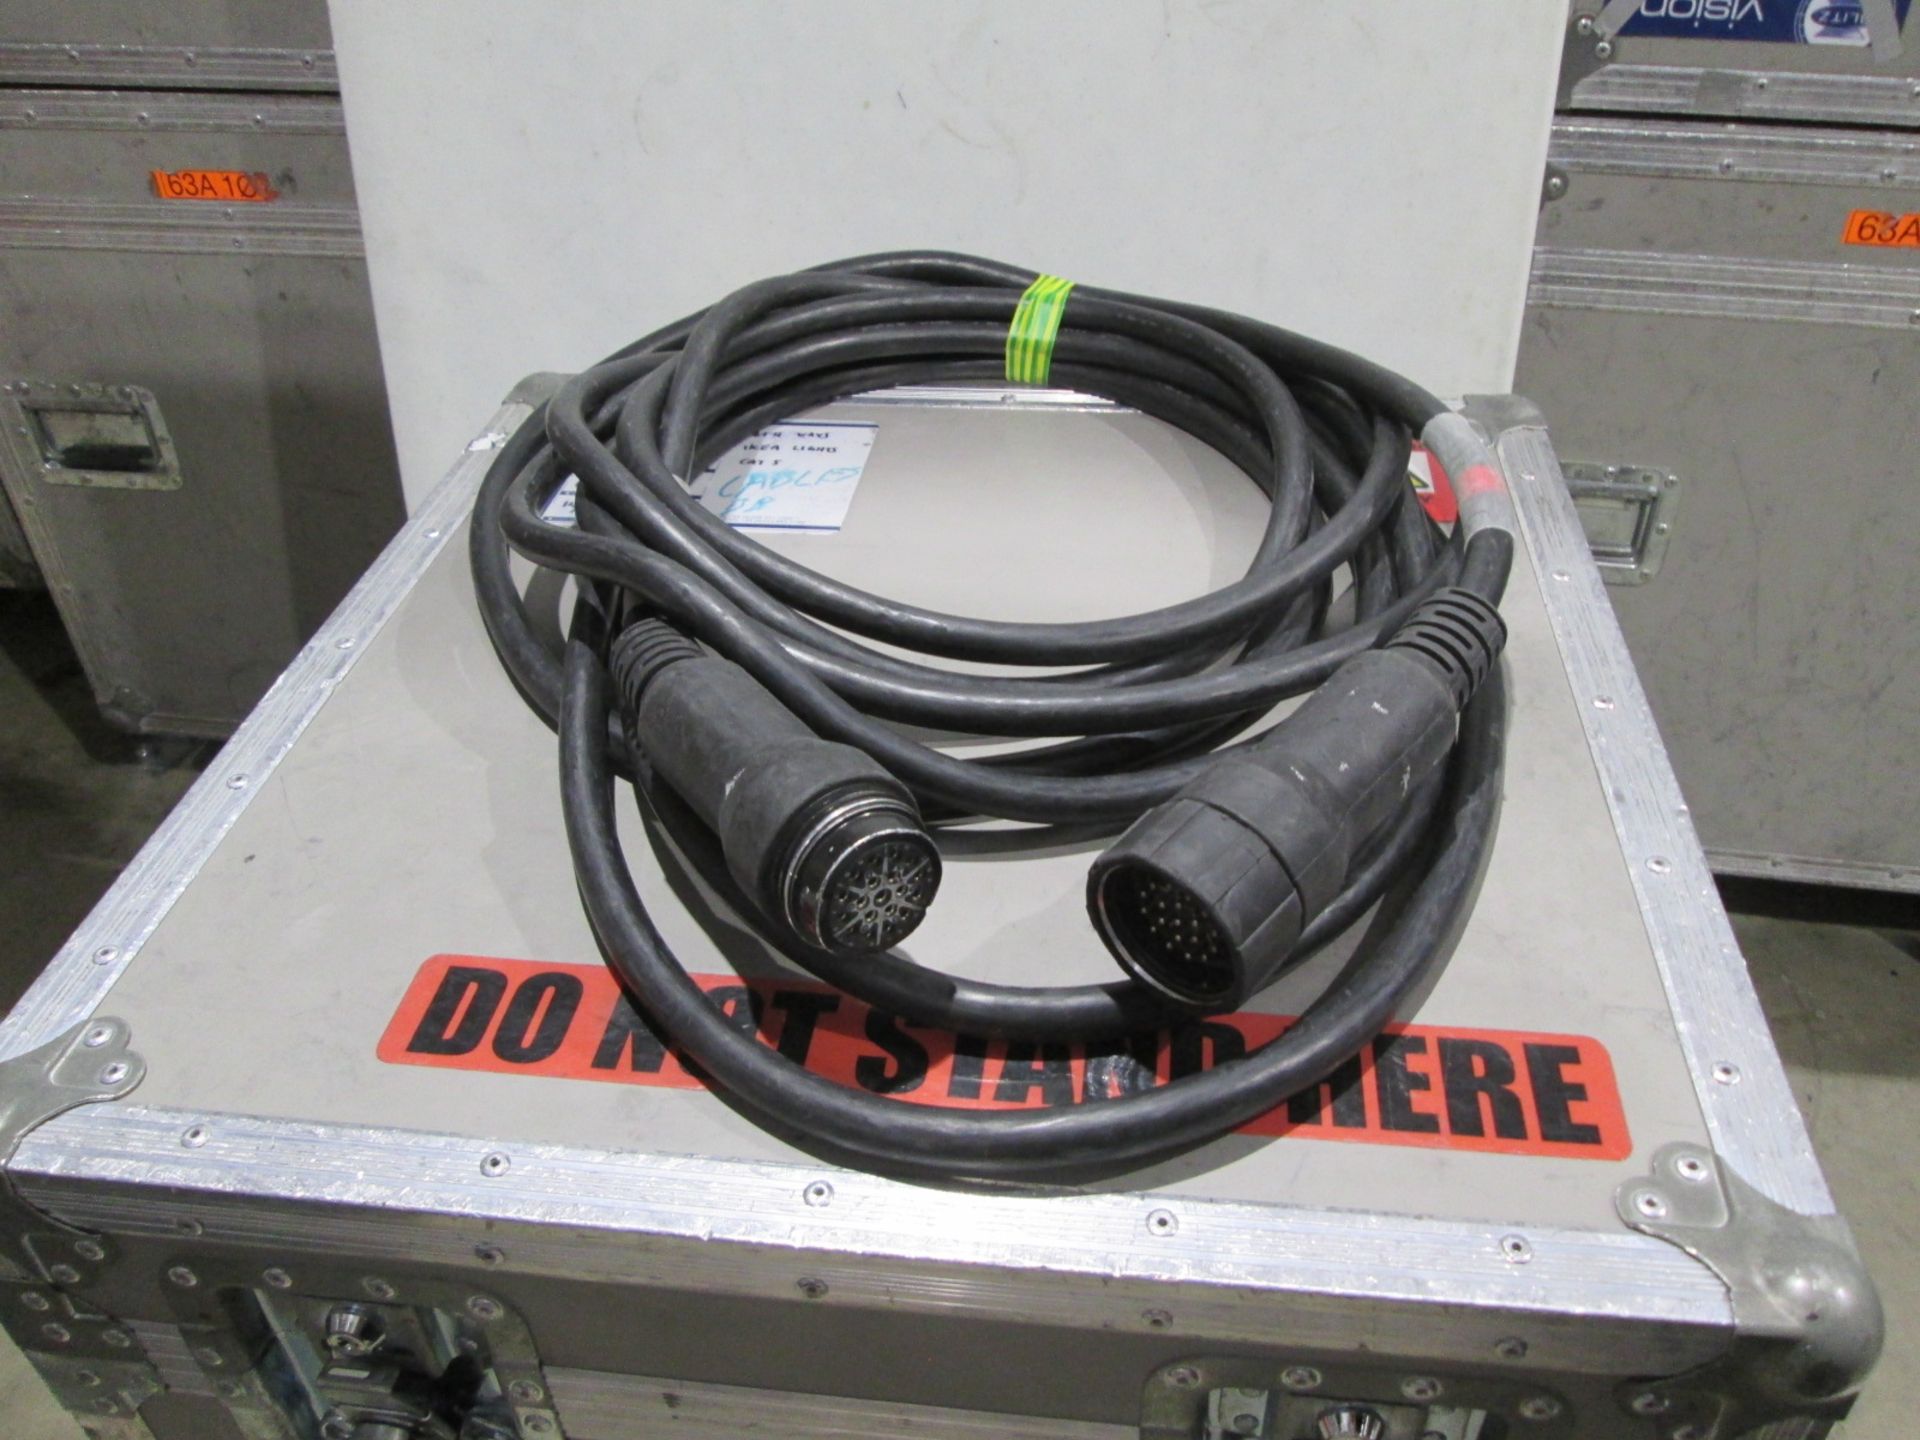 TEN47 19 Pin Socapex Cable, Length 10 Metres (Qty 2)